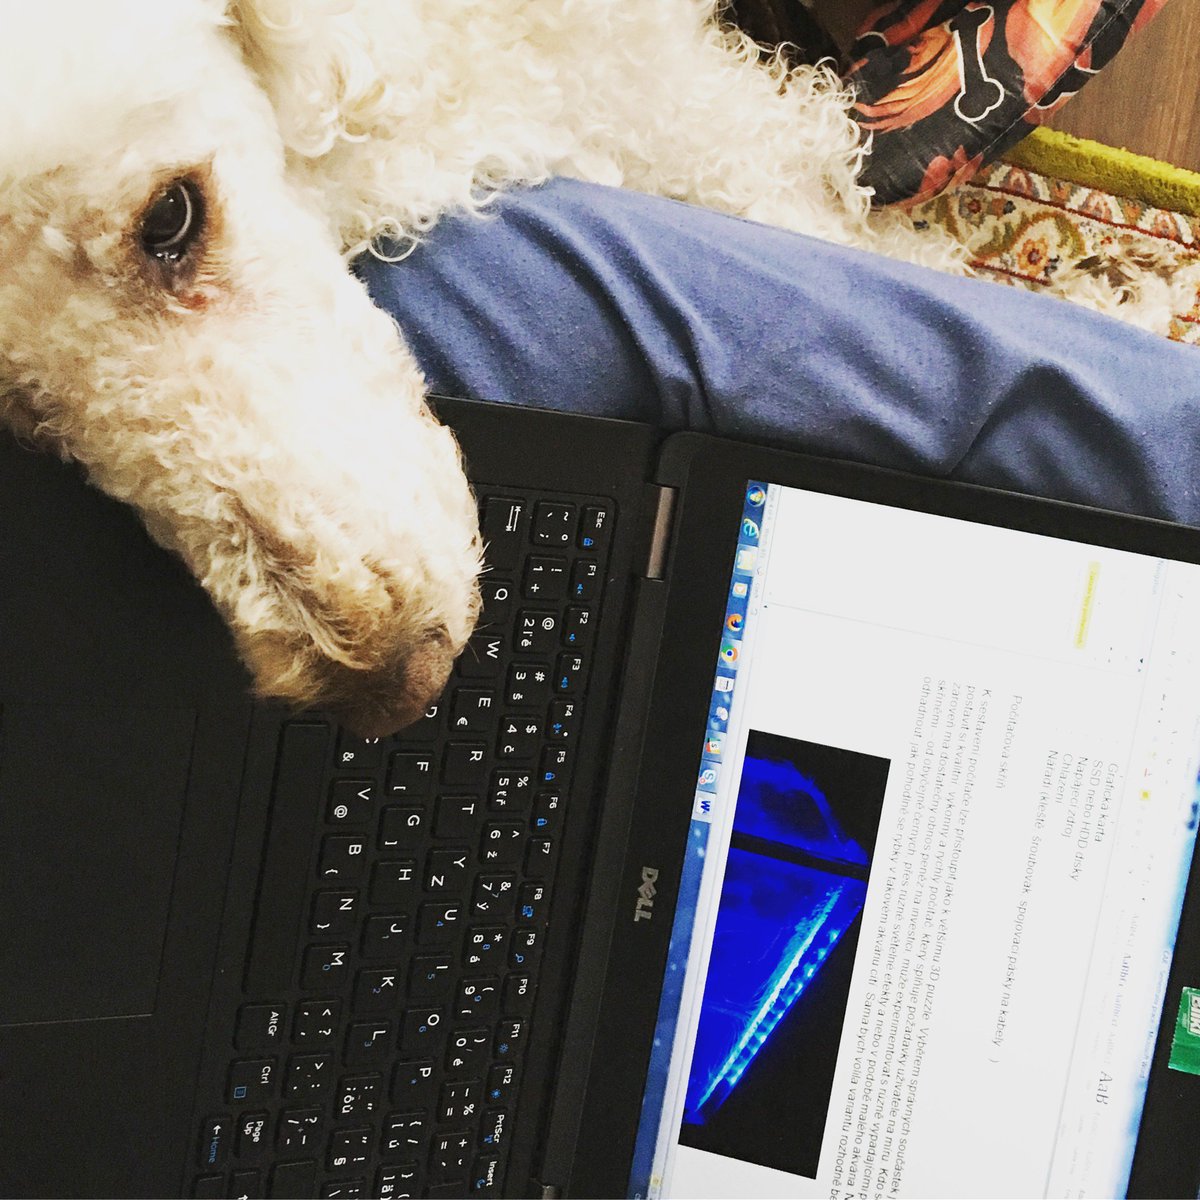 Doing homework with my shaggy friend 😁😀🐩 #royalpoodle #dog #lovefordogs #homework #studying #college #informationtechnologies #womeninit #java #programmer #programming  #sunday